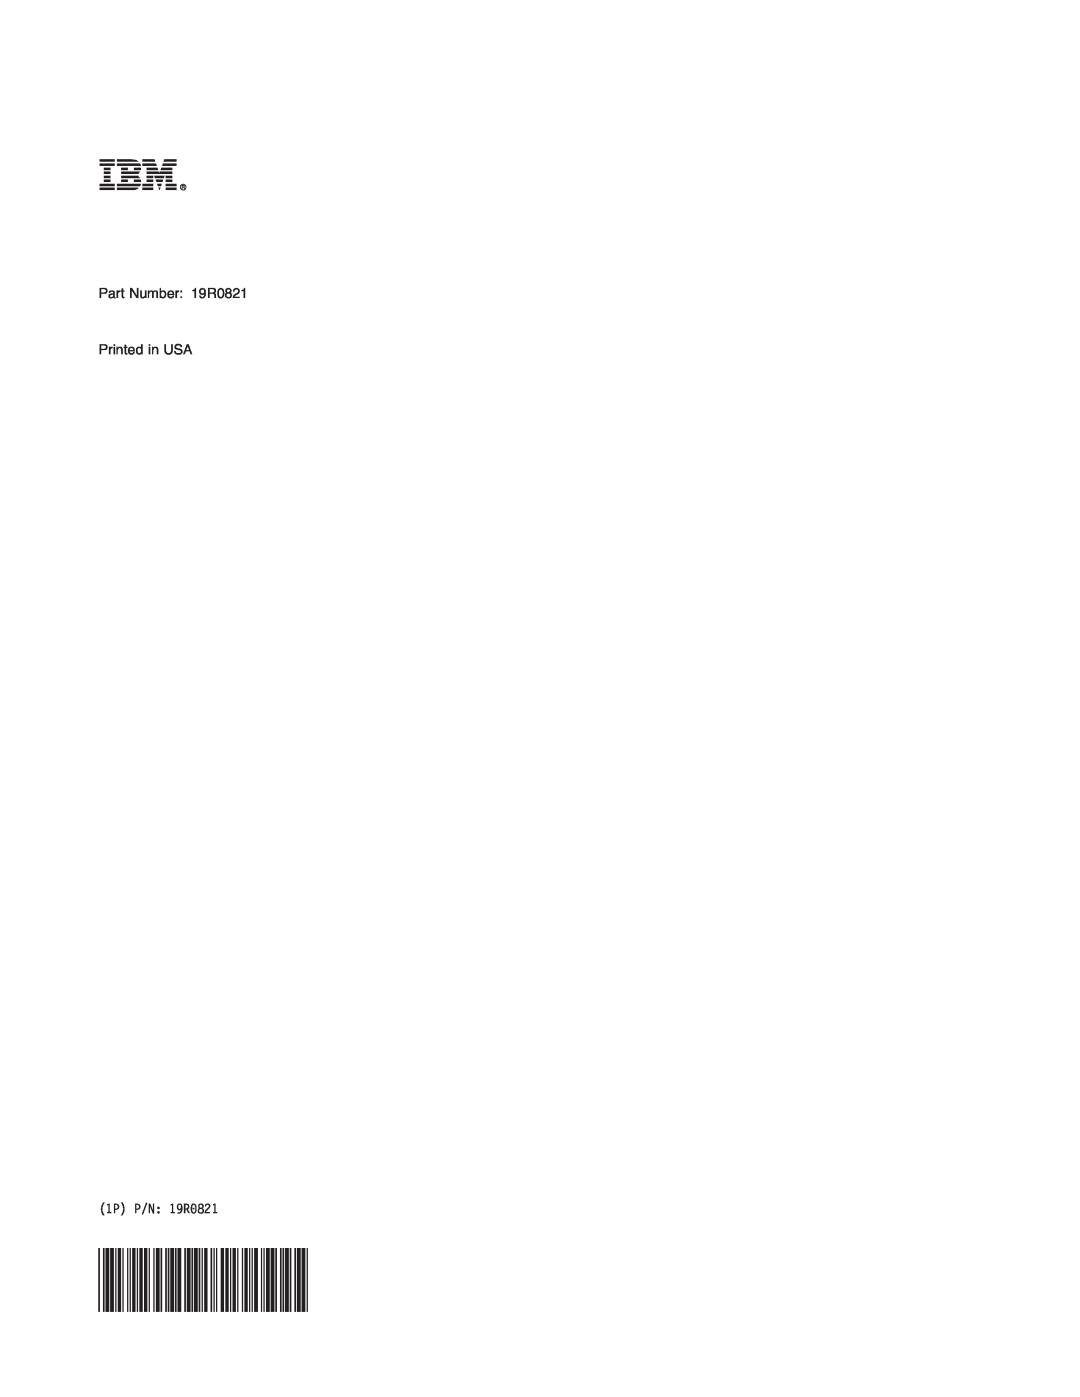 IBM 8428, 8171, 8424, 8425, 8173 manual Part Number 19R0821 Printed in USA, 1P P/N 19R0821 